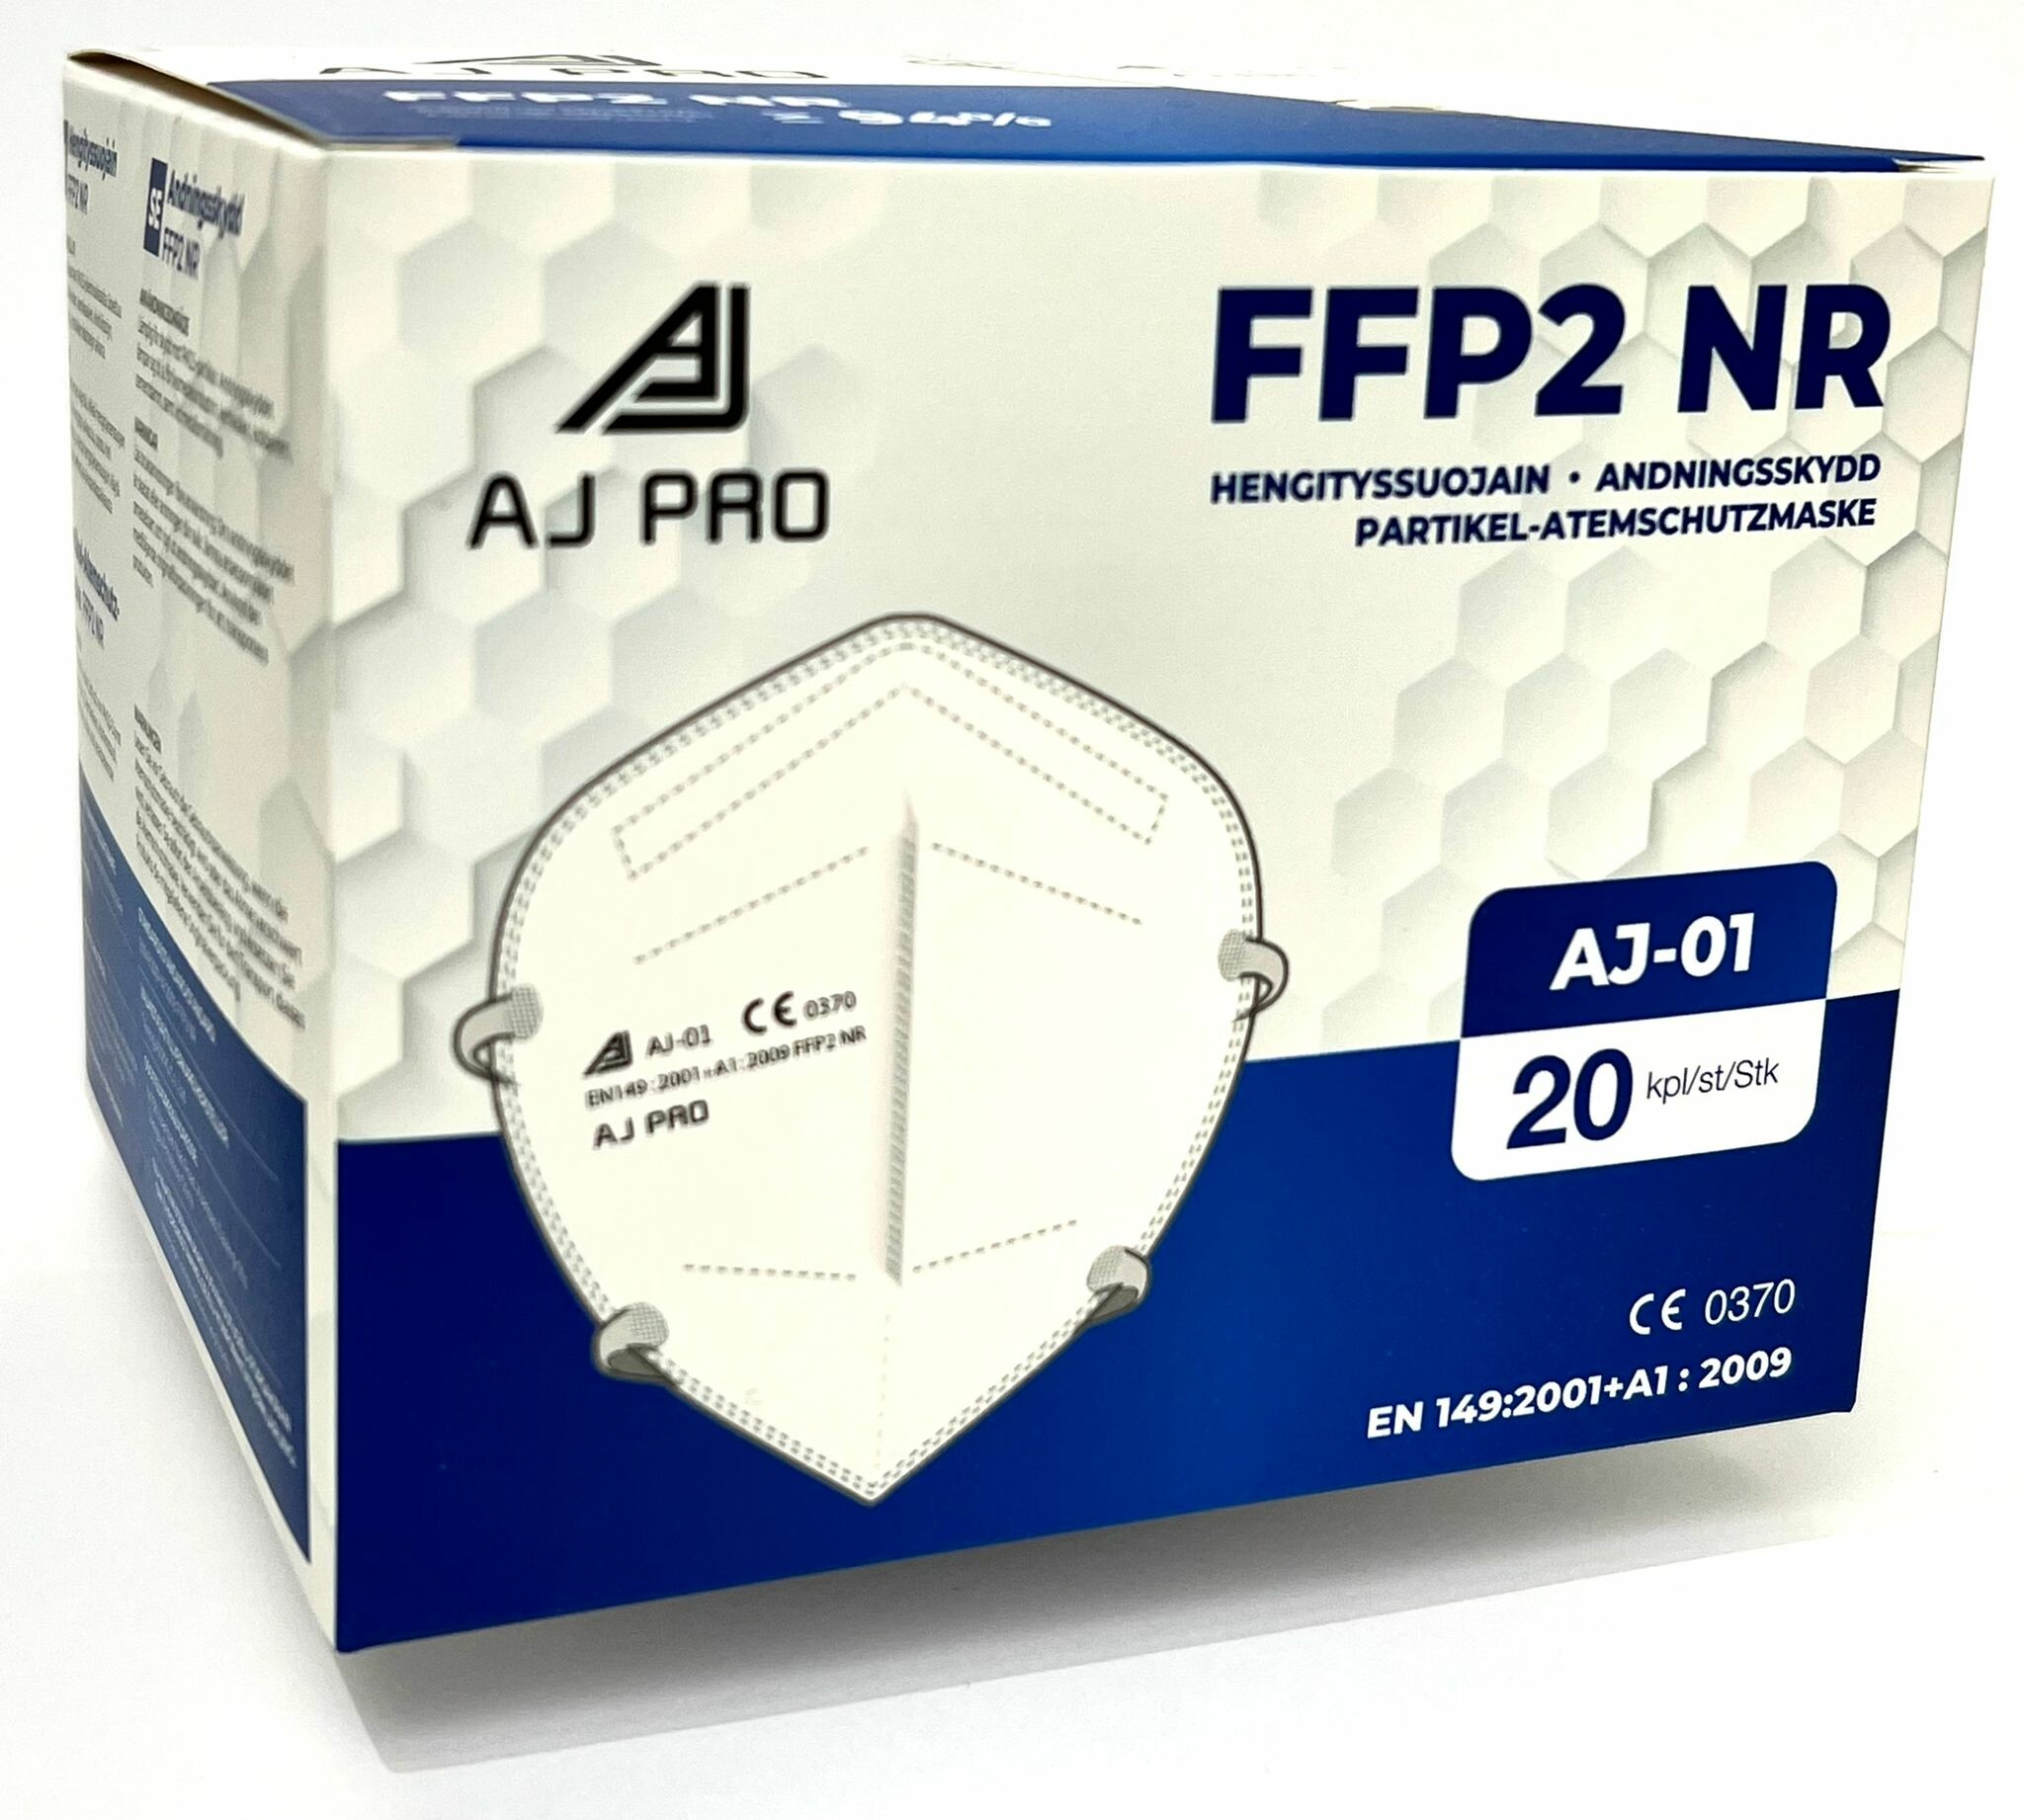 Aj Pro FFP2 respirator